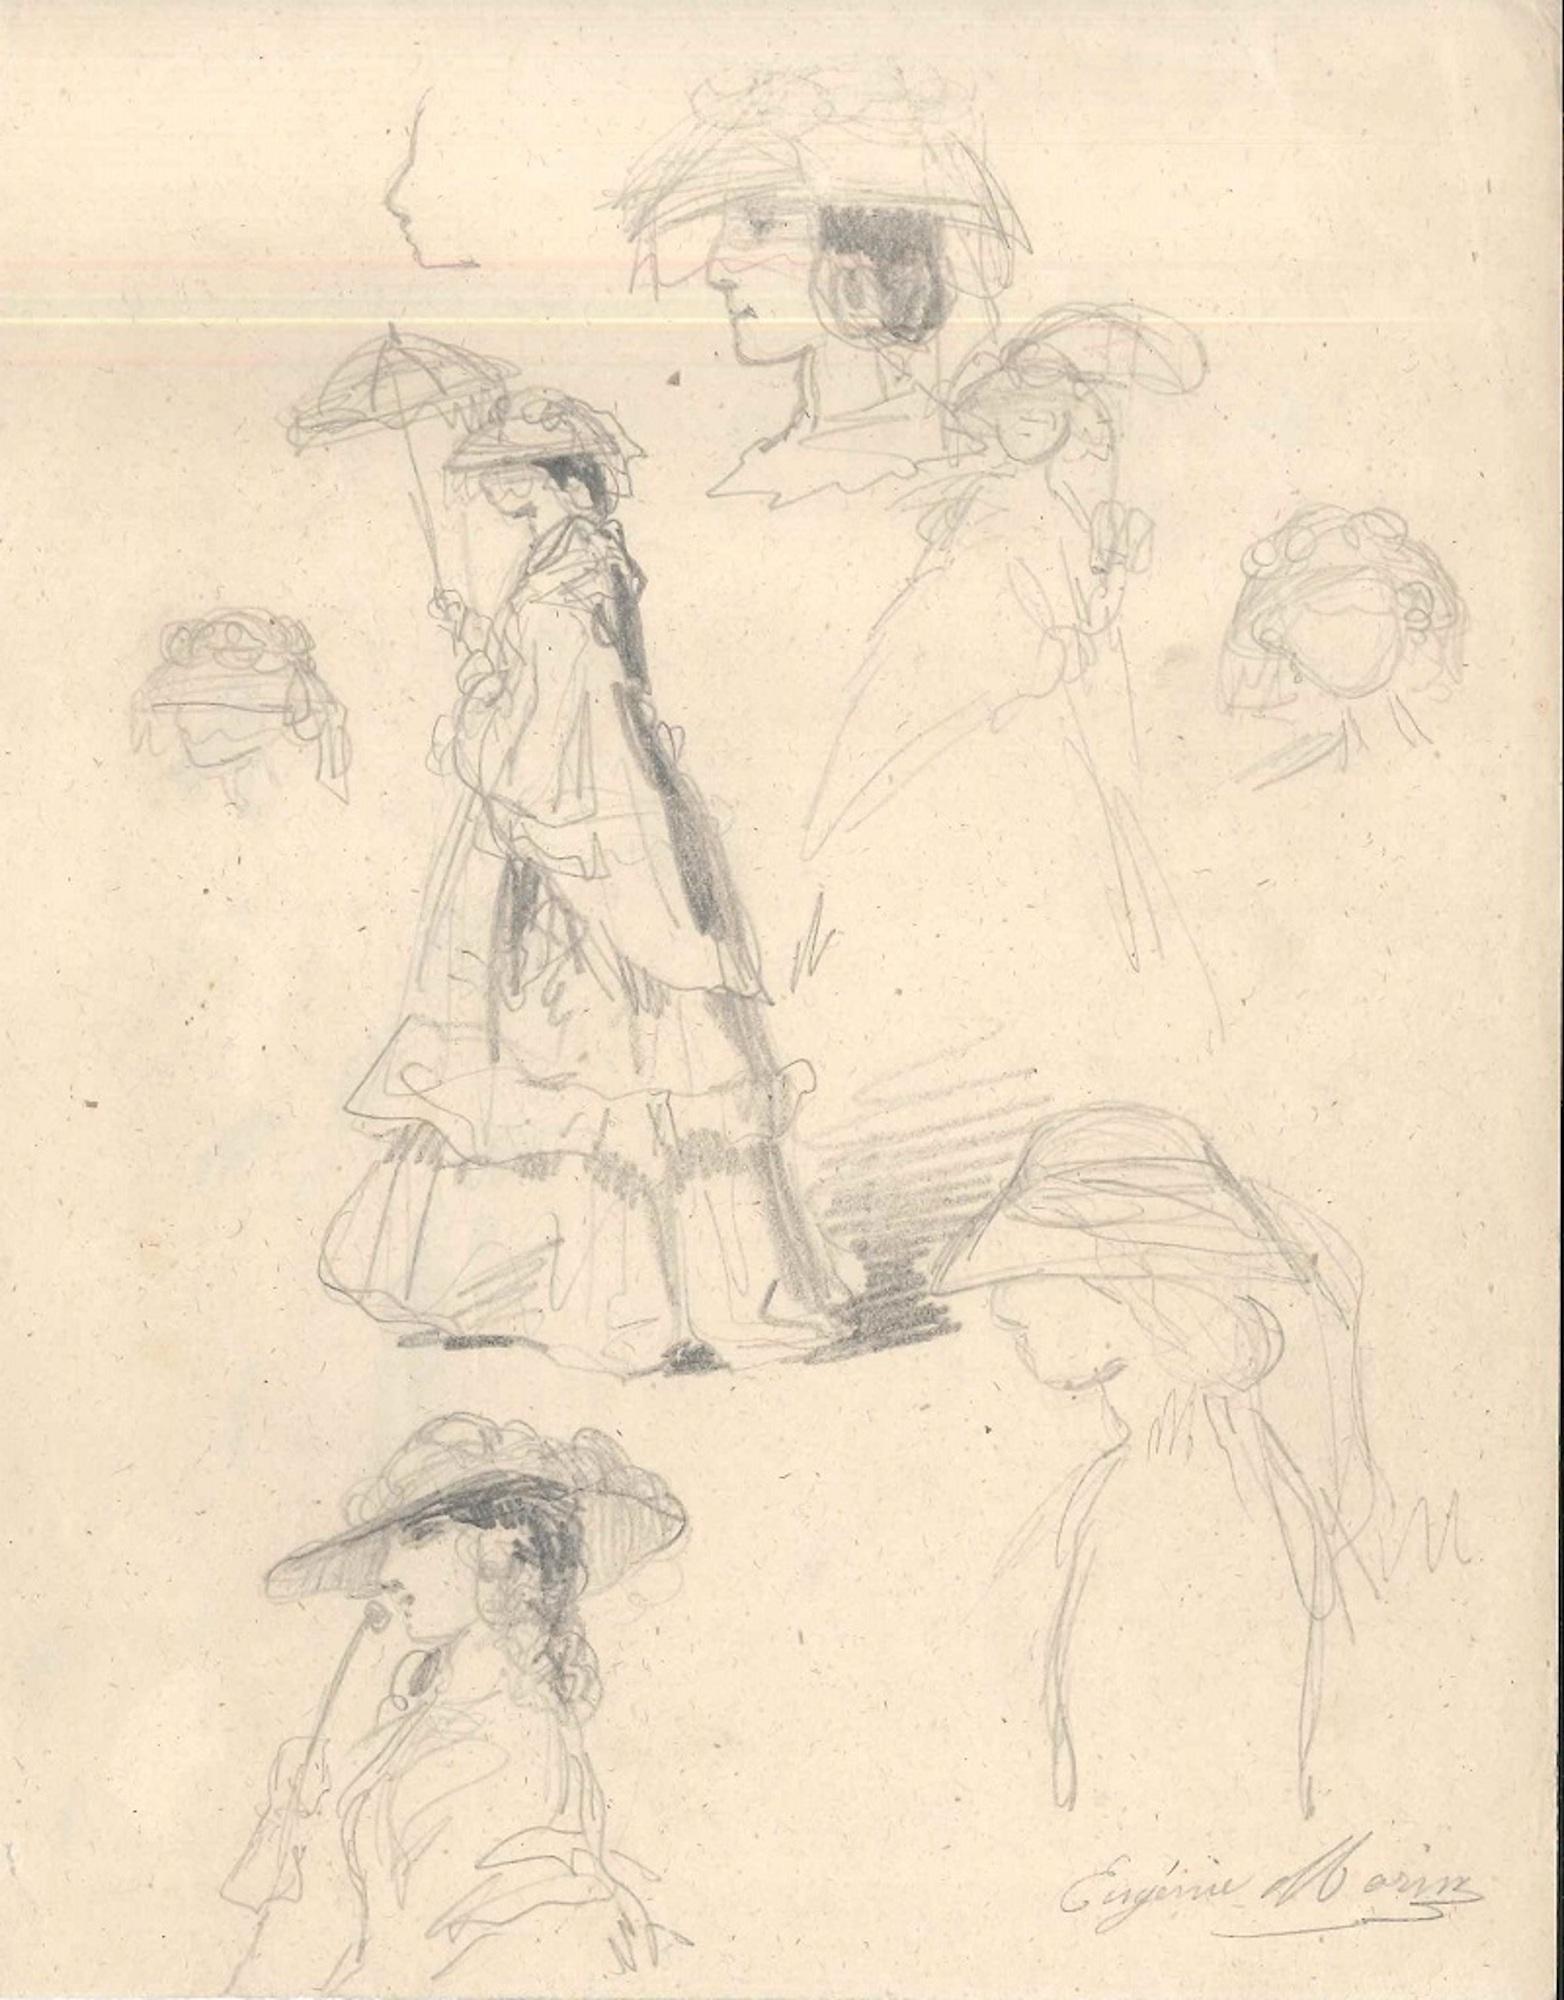 Eugénie Morin Figurative Art - Fashionable Woman - Original Pencil Drawing by E. Morin - Mid 19th century